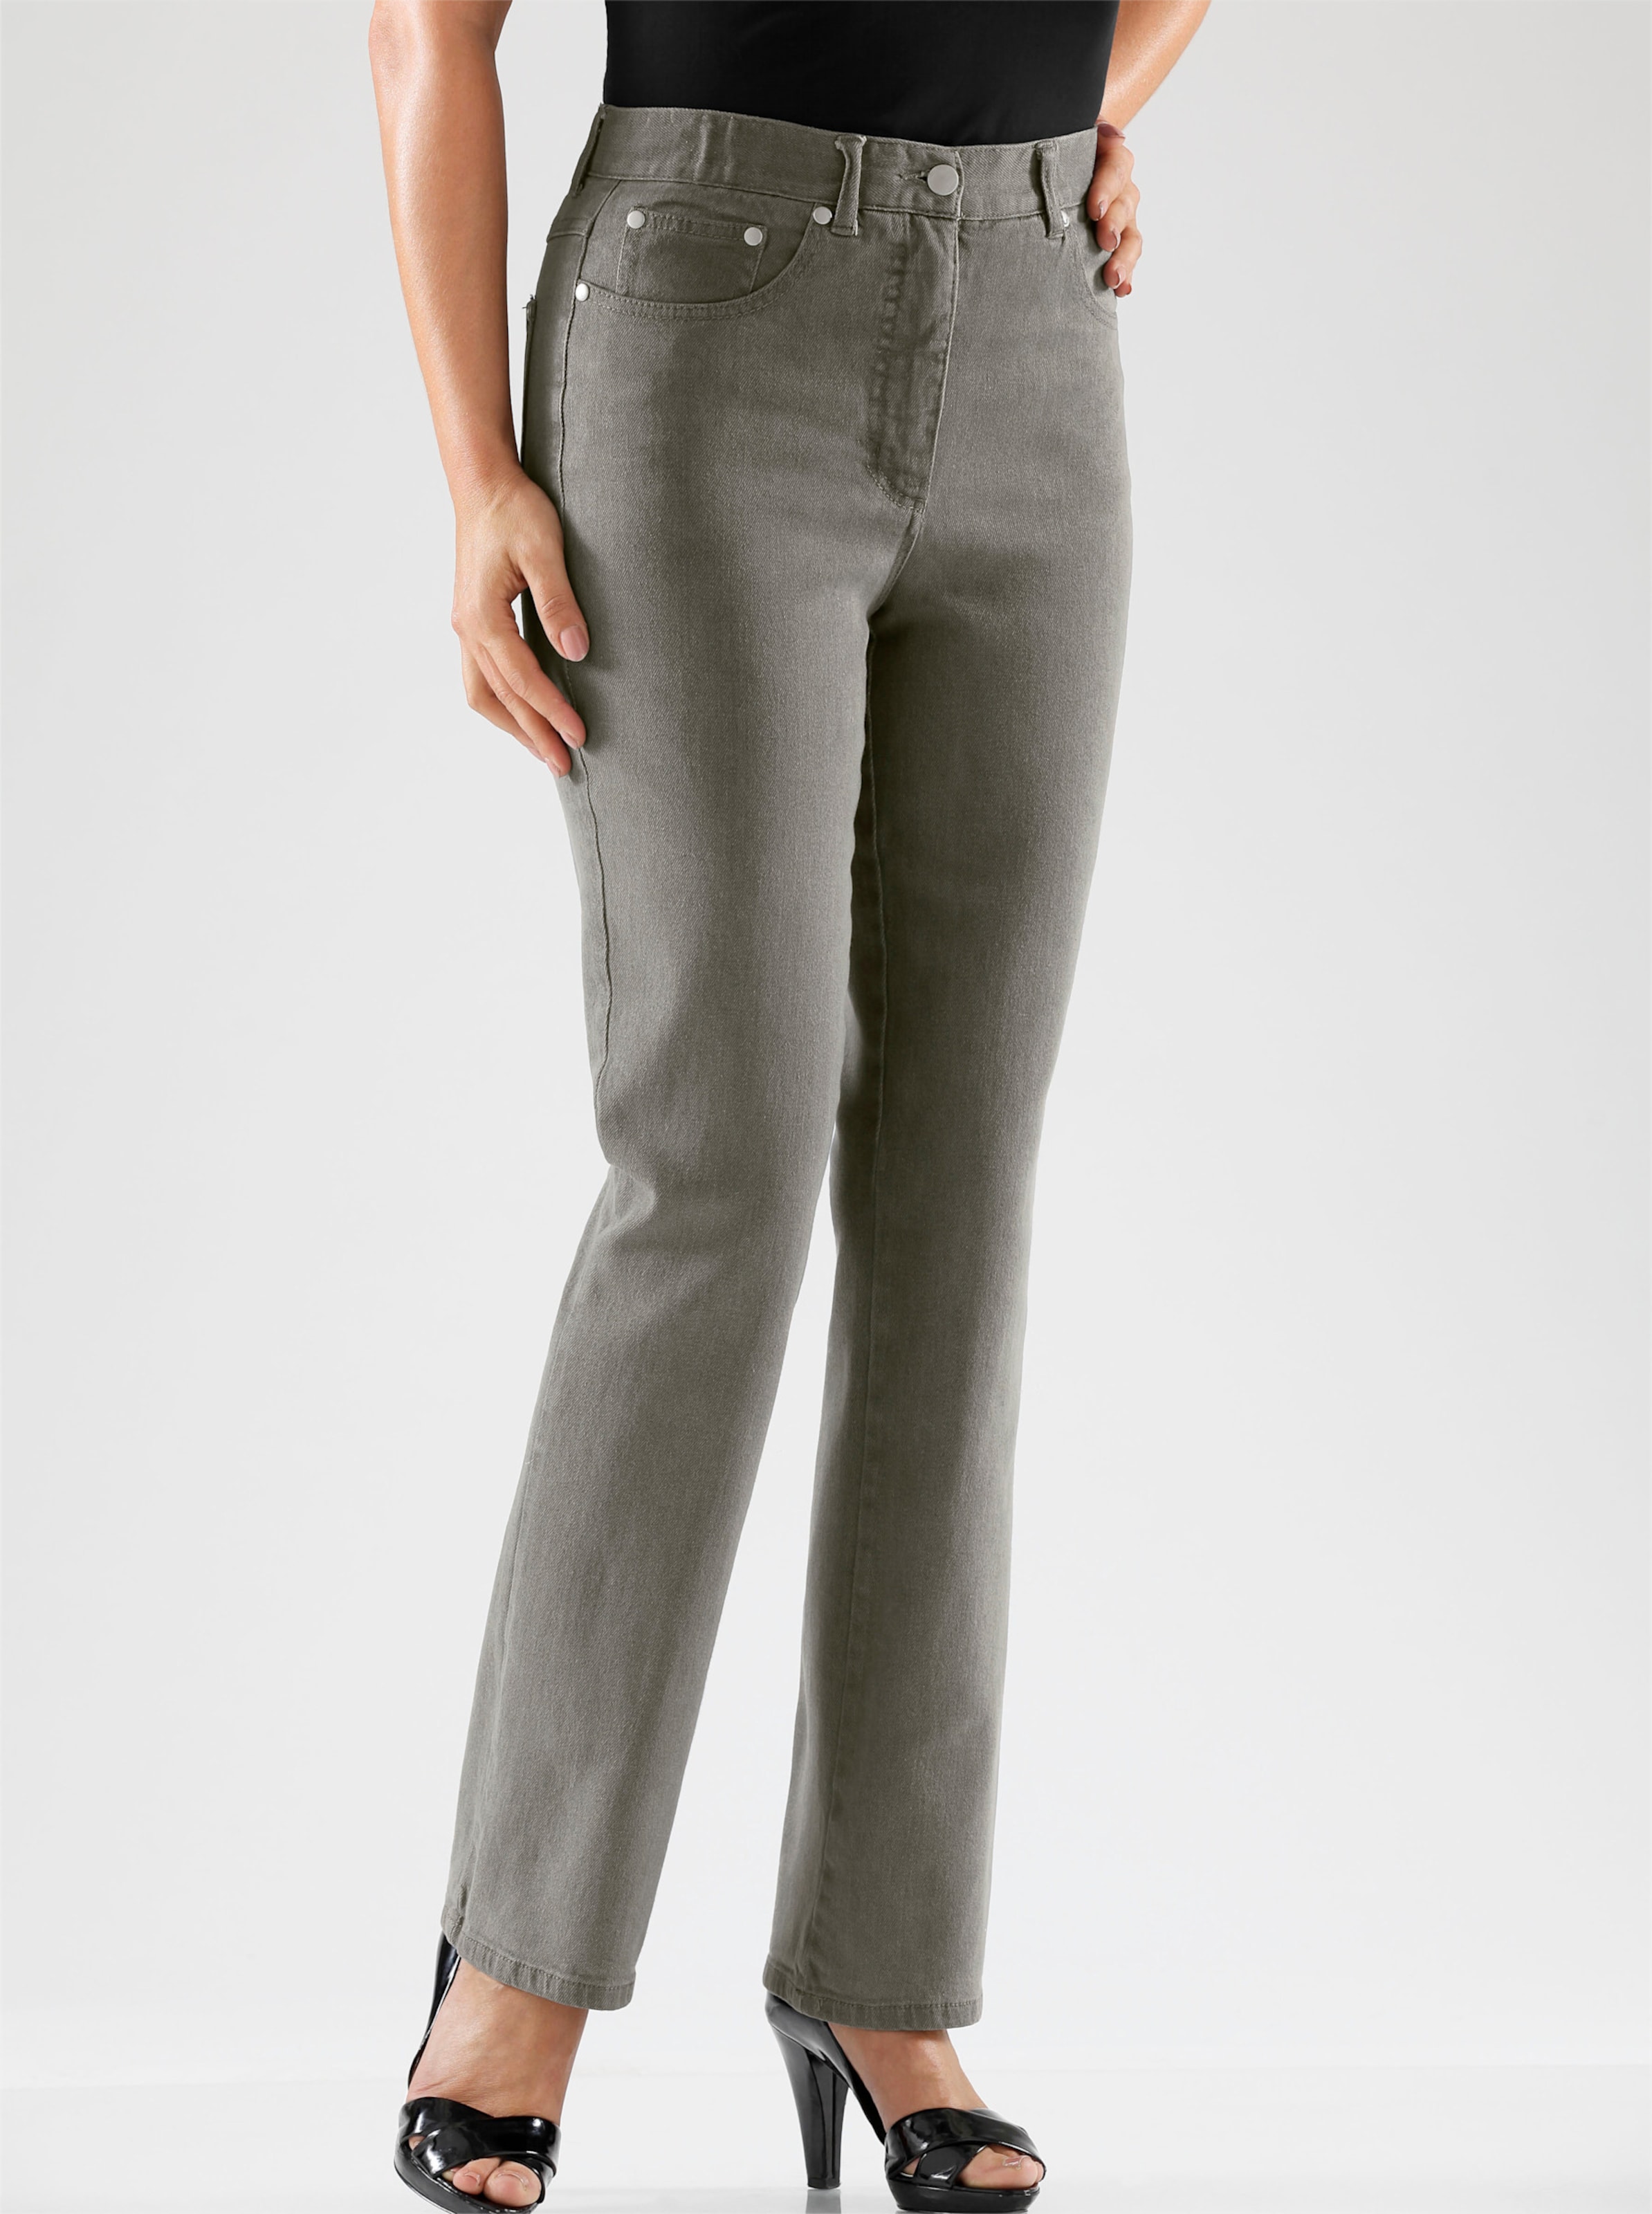 Witt Damen 5-Pocket-Jeans, grey-denim